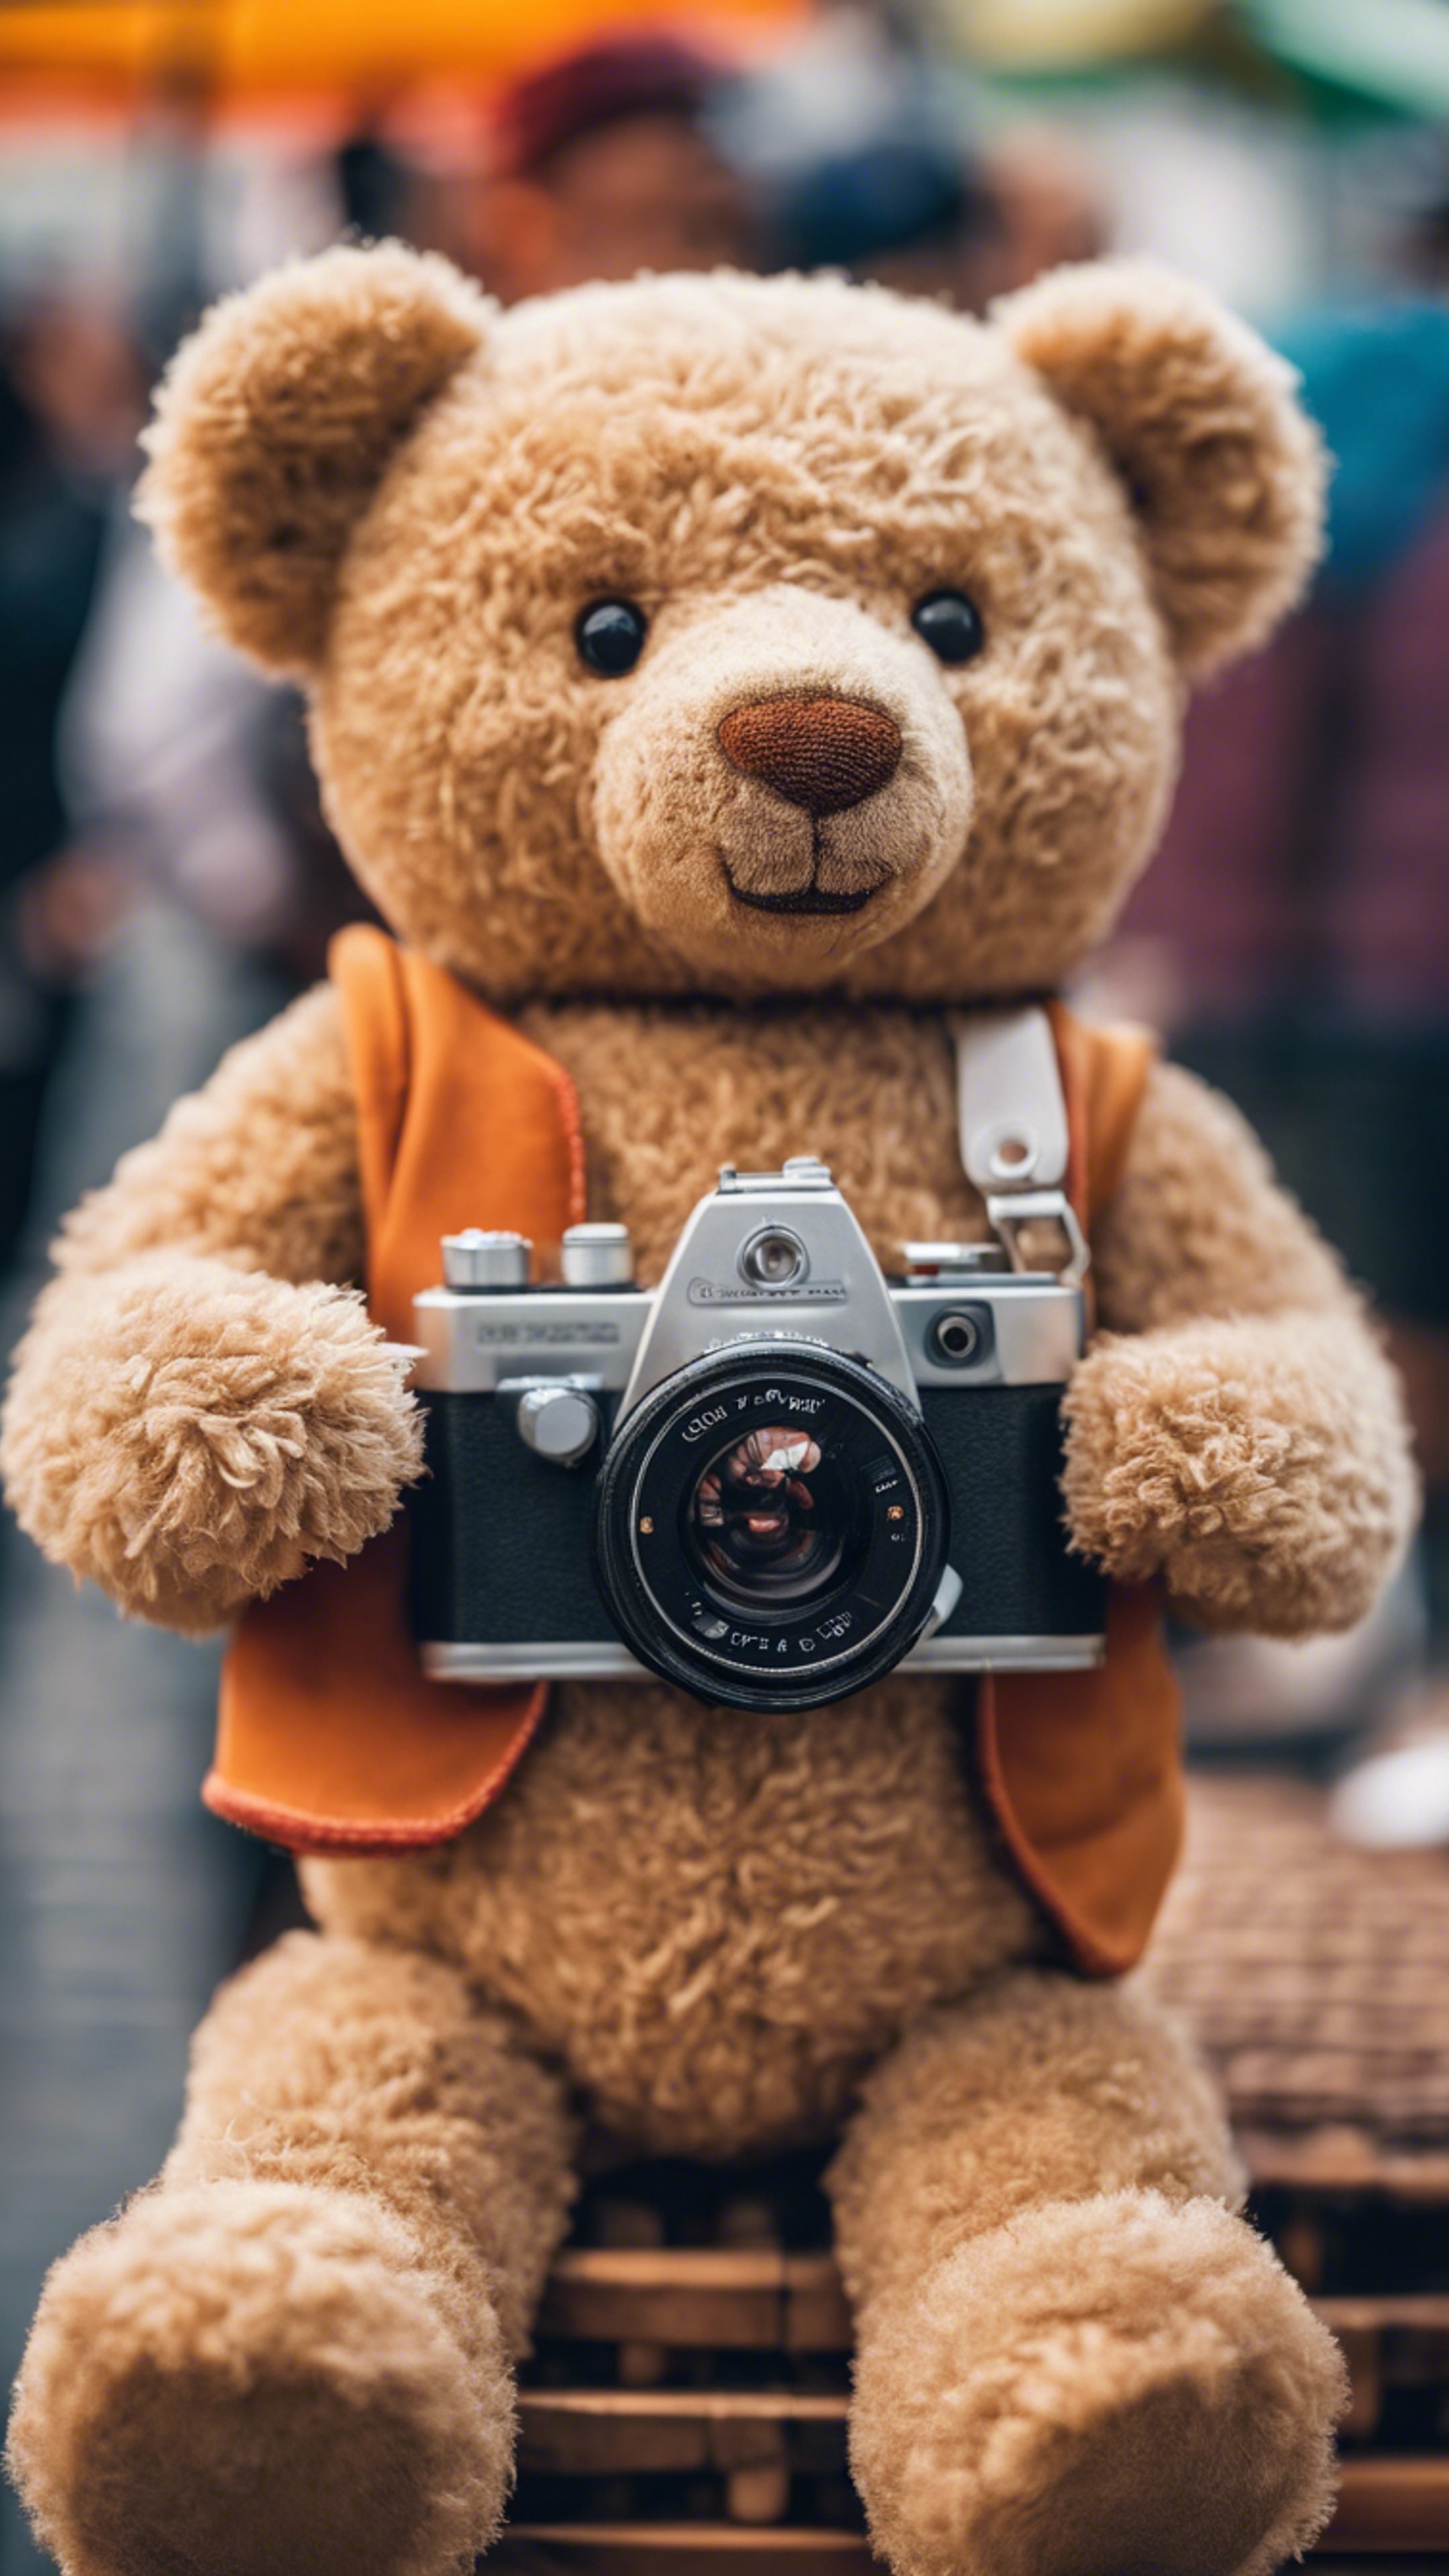 A teddy bear photography hobbyist, holding a toy camera, stood amidst a vibrant street fair. Tapeta[6bbb7c06ef4c4008bbb6]